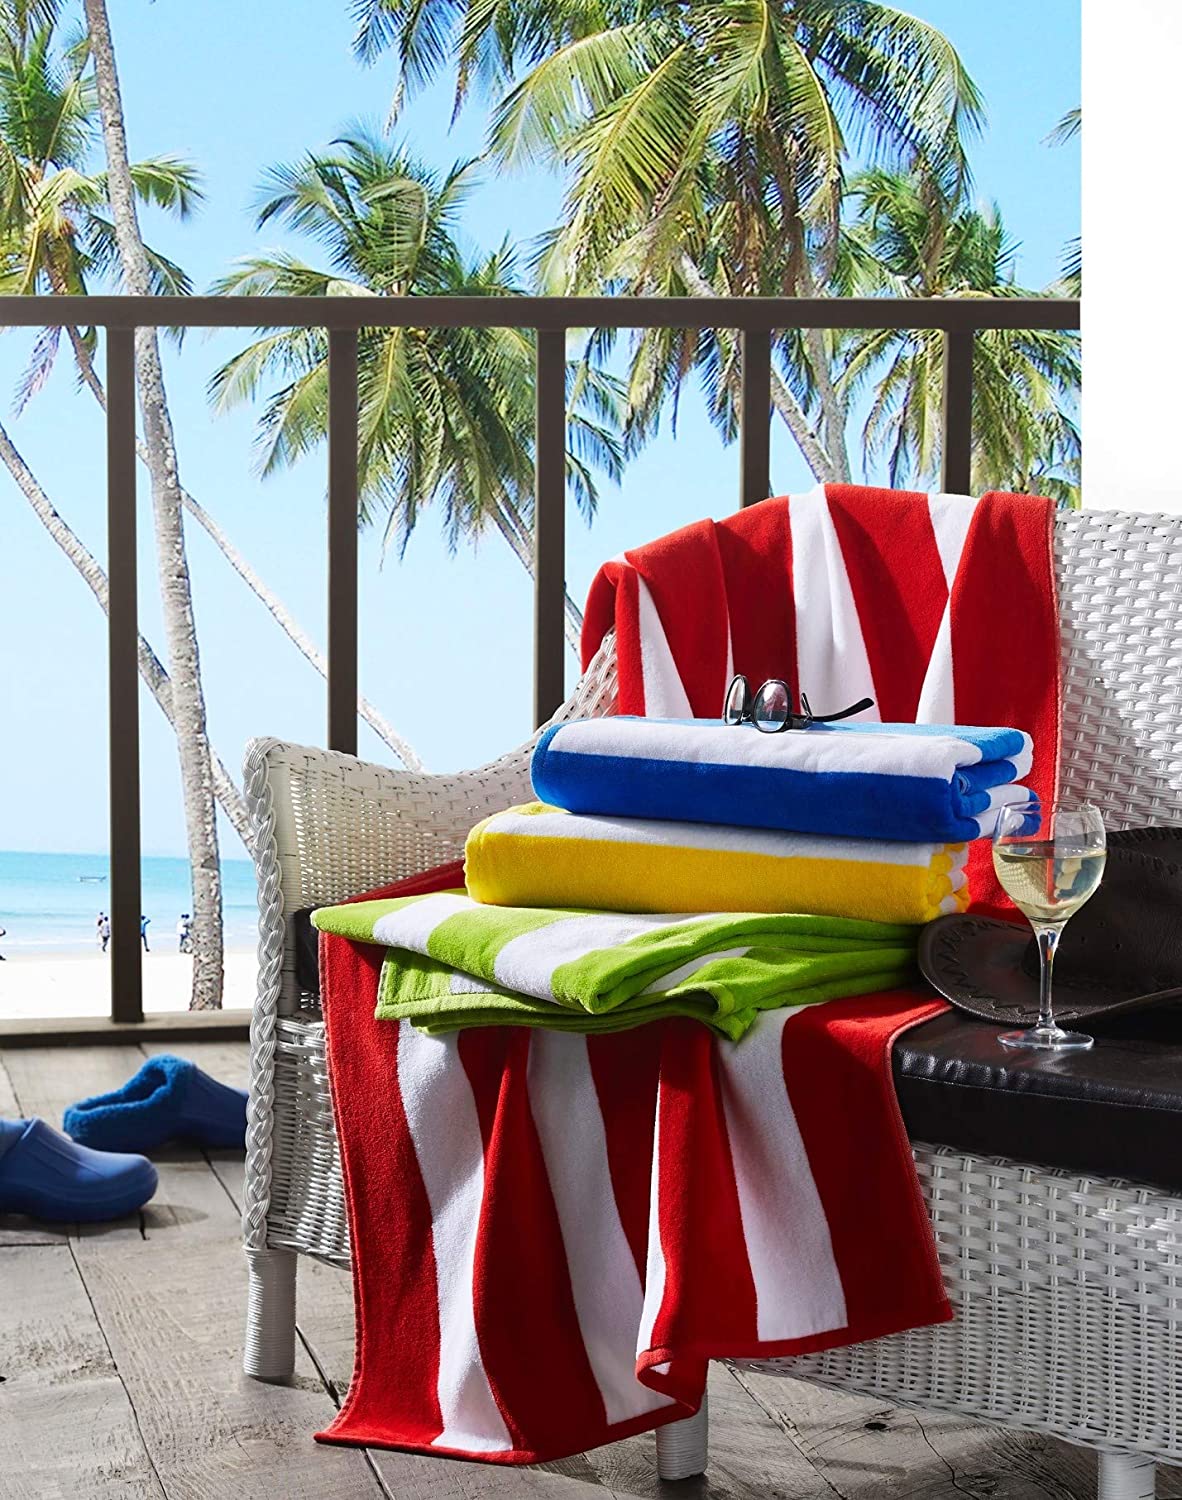 Cabana Pool Towel - Default Title - Standard Textile Home